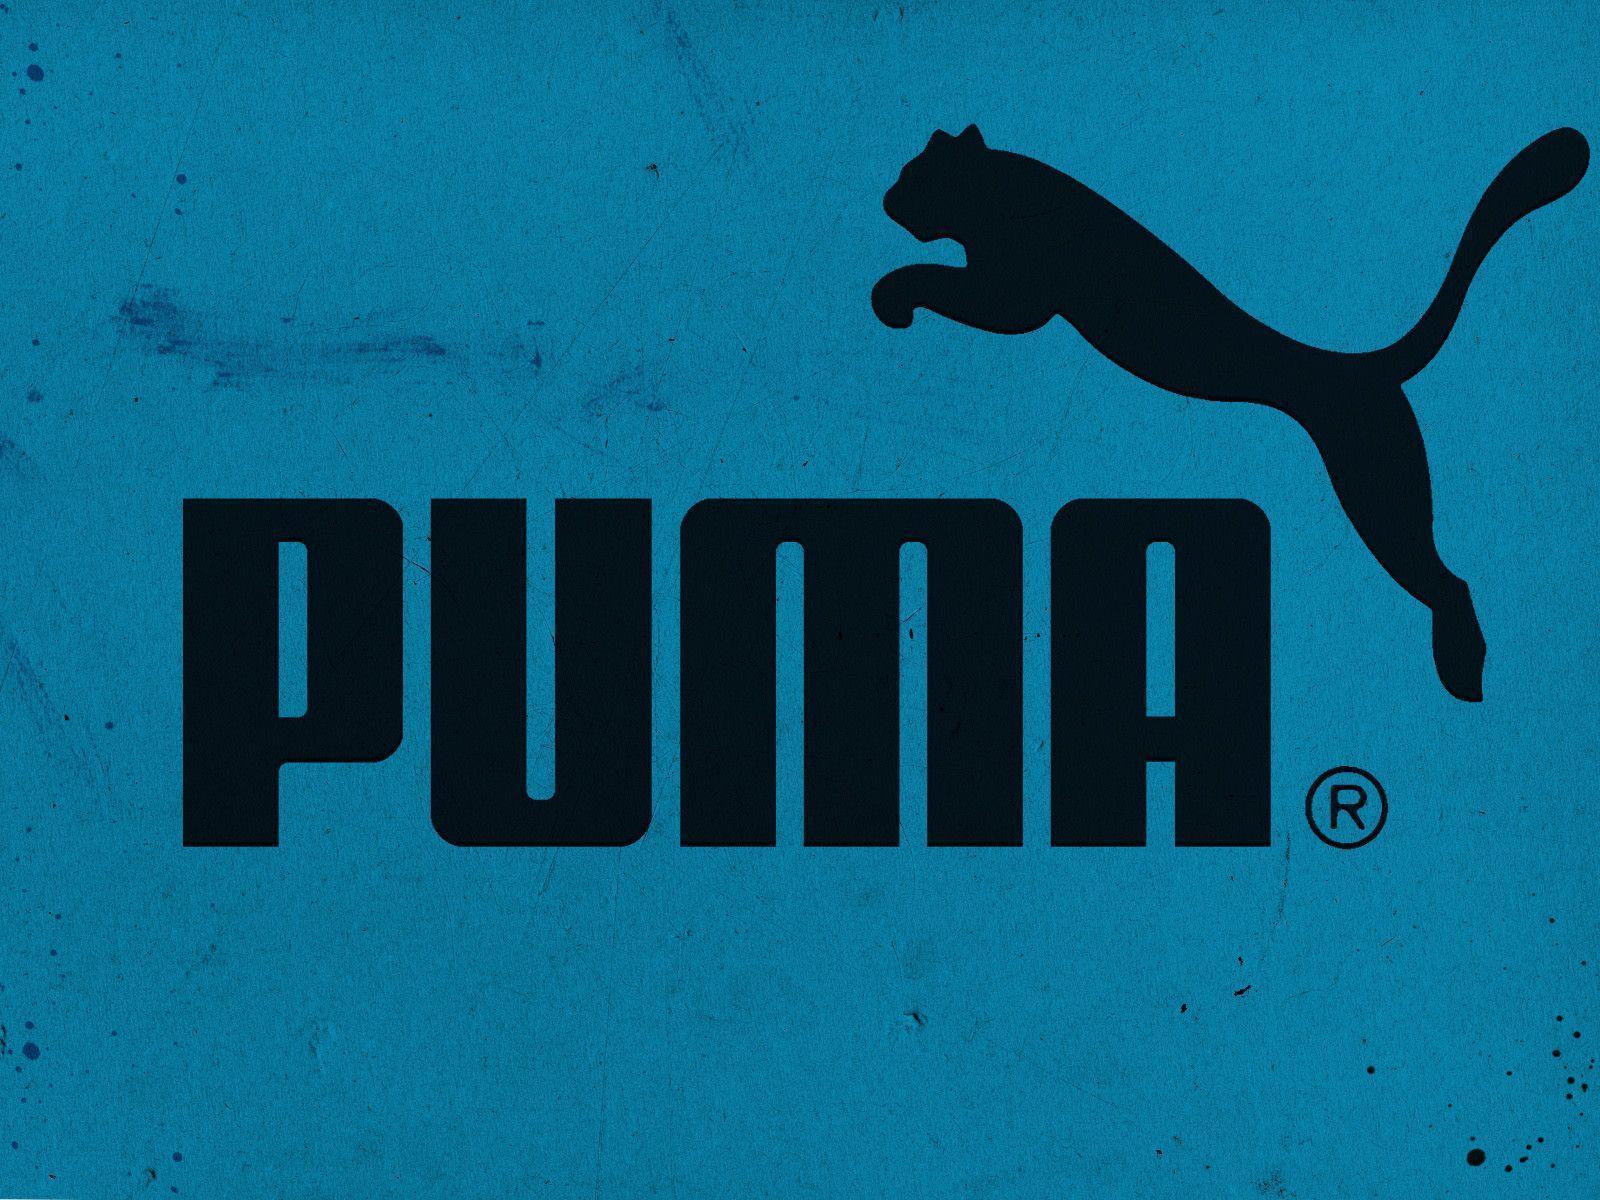 Download wallpapers Puma logo metal emblem apparel brand black carbon  texture global apparel brands Puma fashion concept Puma emblem for  desktop with resolution 2560x1600 High Quality HD pictures wallpapers